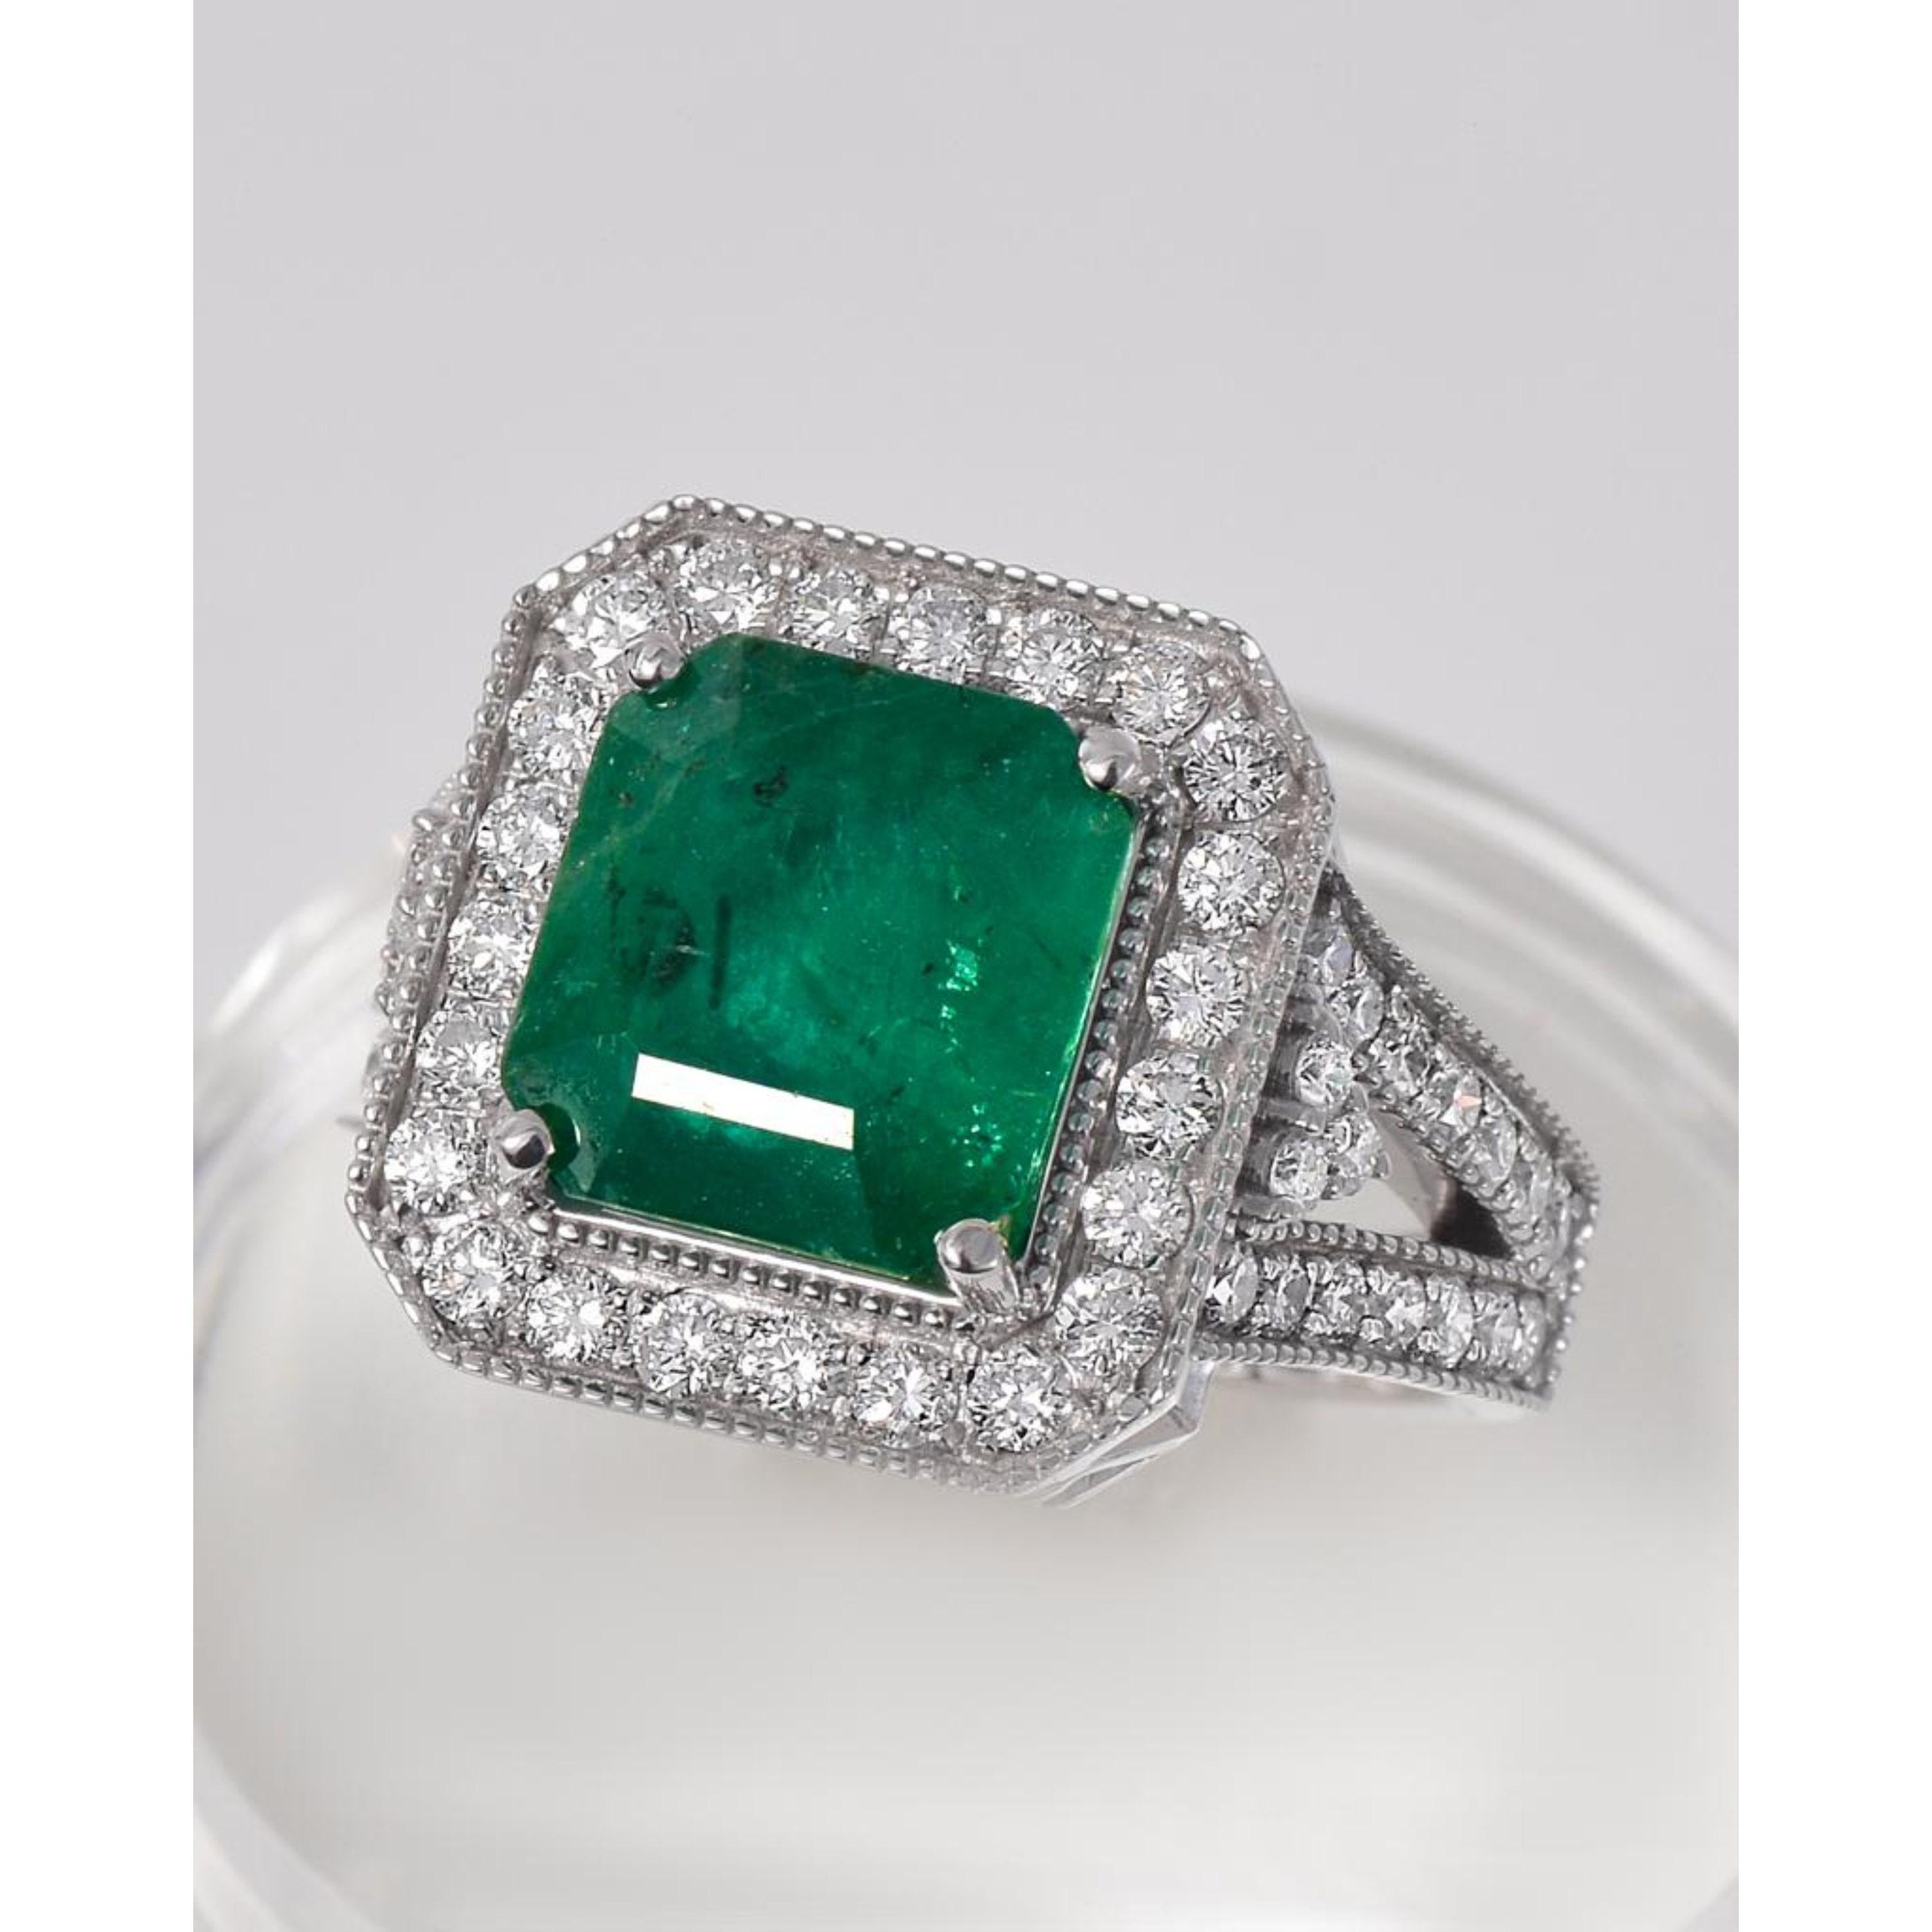 For Sale:  4 Carat Cushion Cut Halo Emerald Engagement Ring Art Deco Diamond Wedding Ring 5